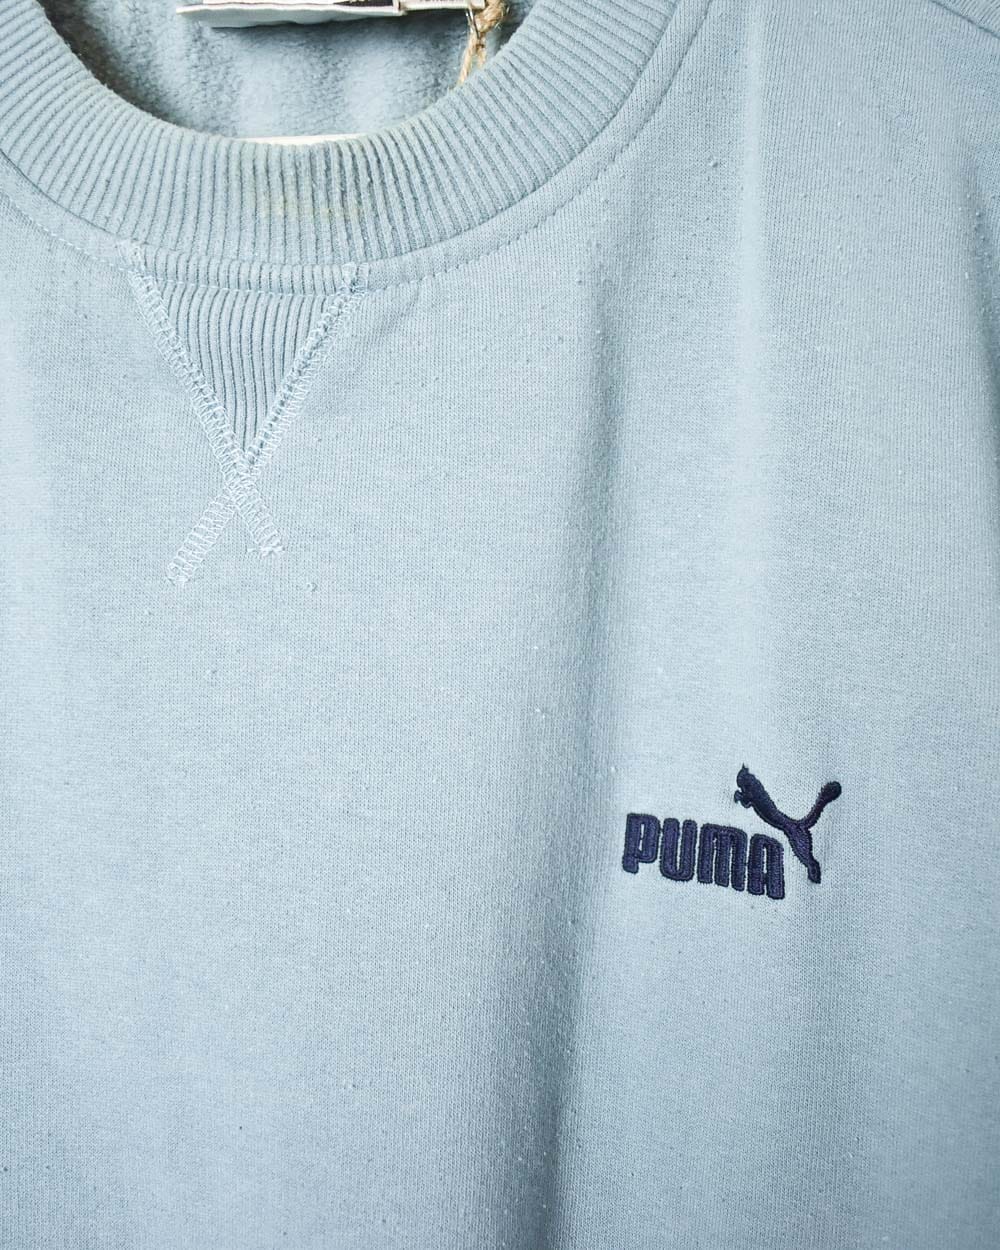 Baby Puma Sweatshirt - Large